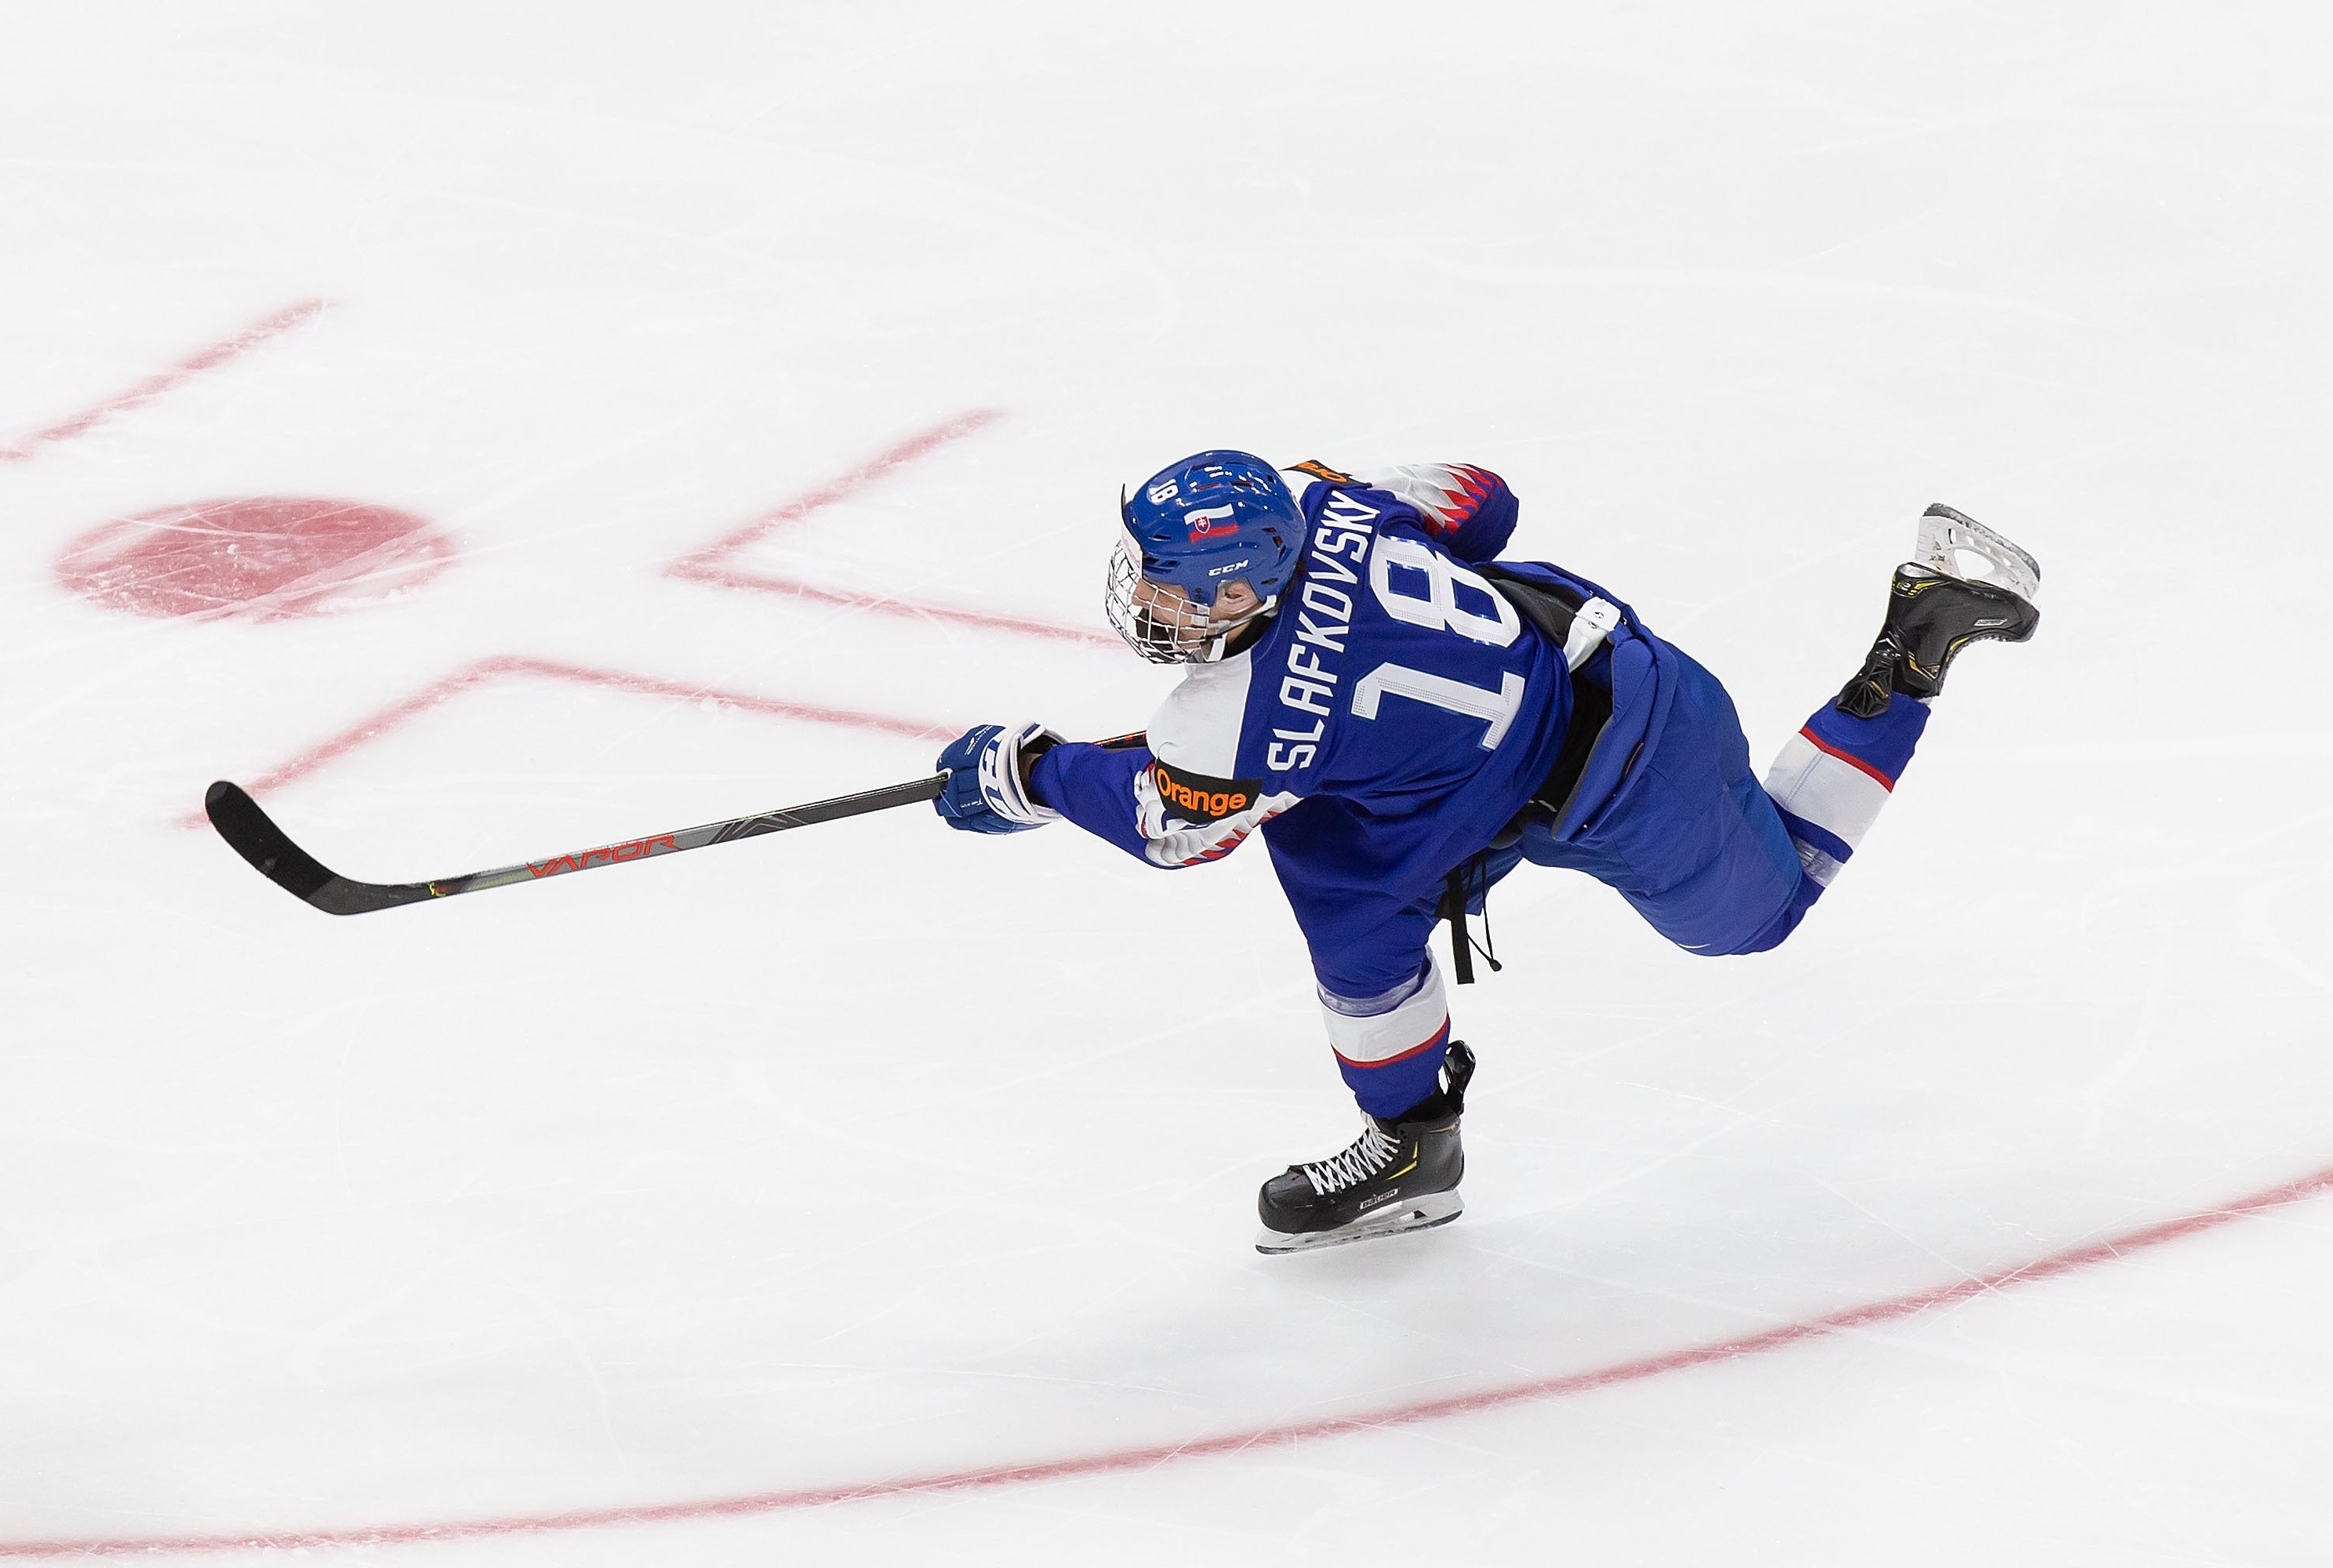 KHL on X: Big night for Kirill Marchenko, who had career-high 3